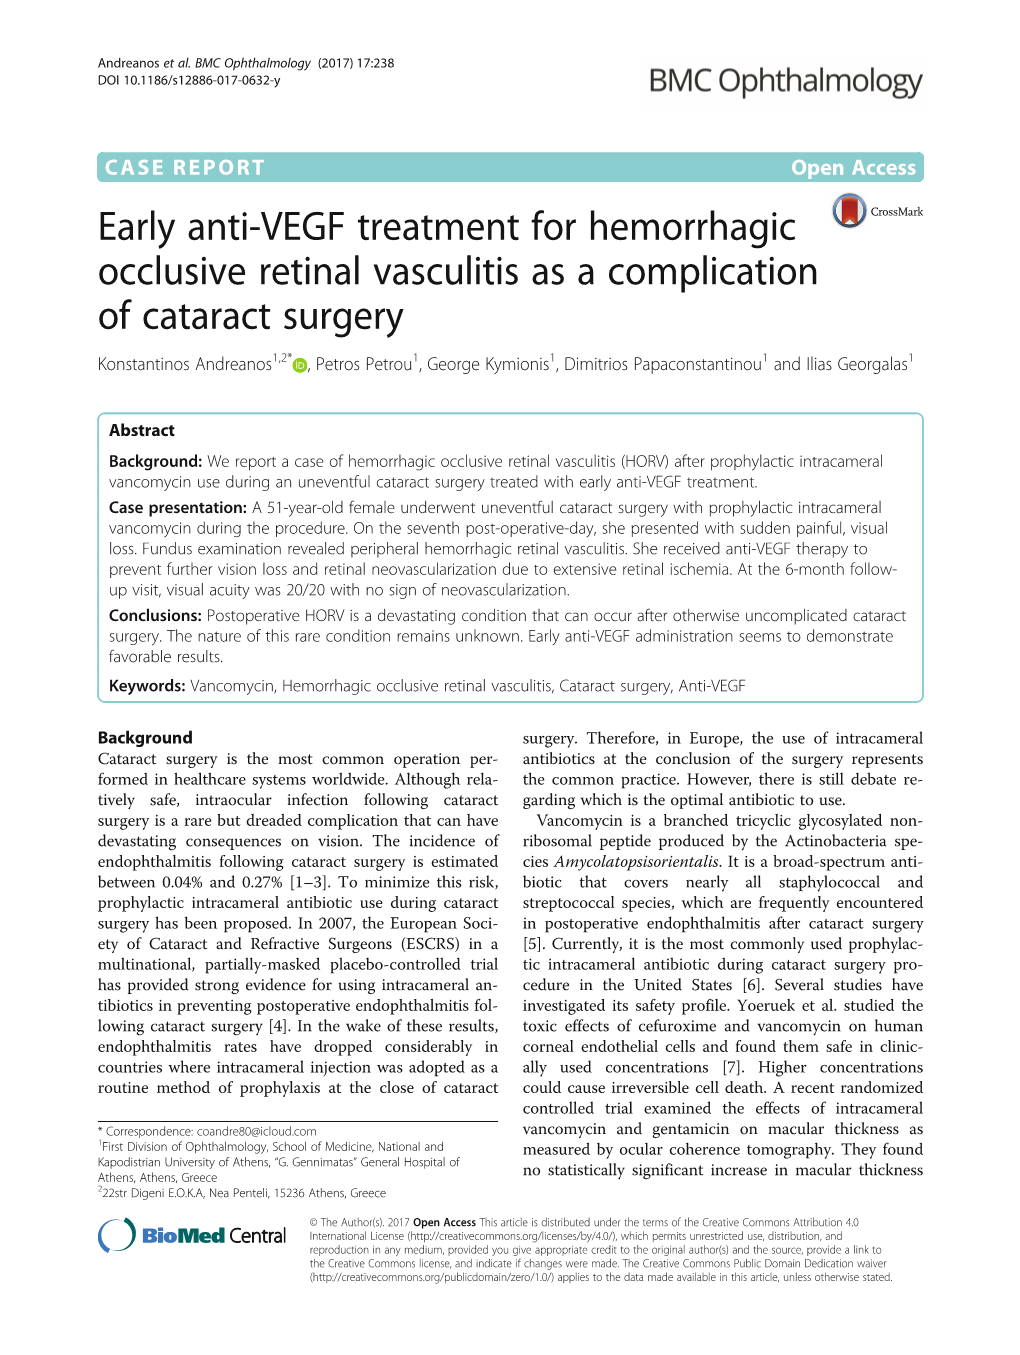 Early Anti-VEGF Treatment for Hemorrhagic Occlusive Retinal